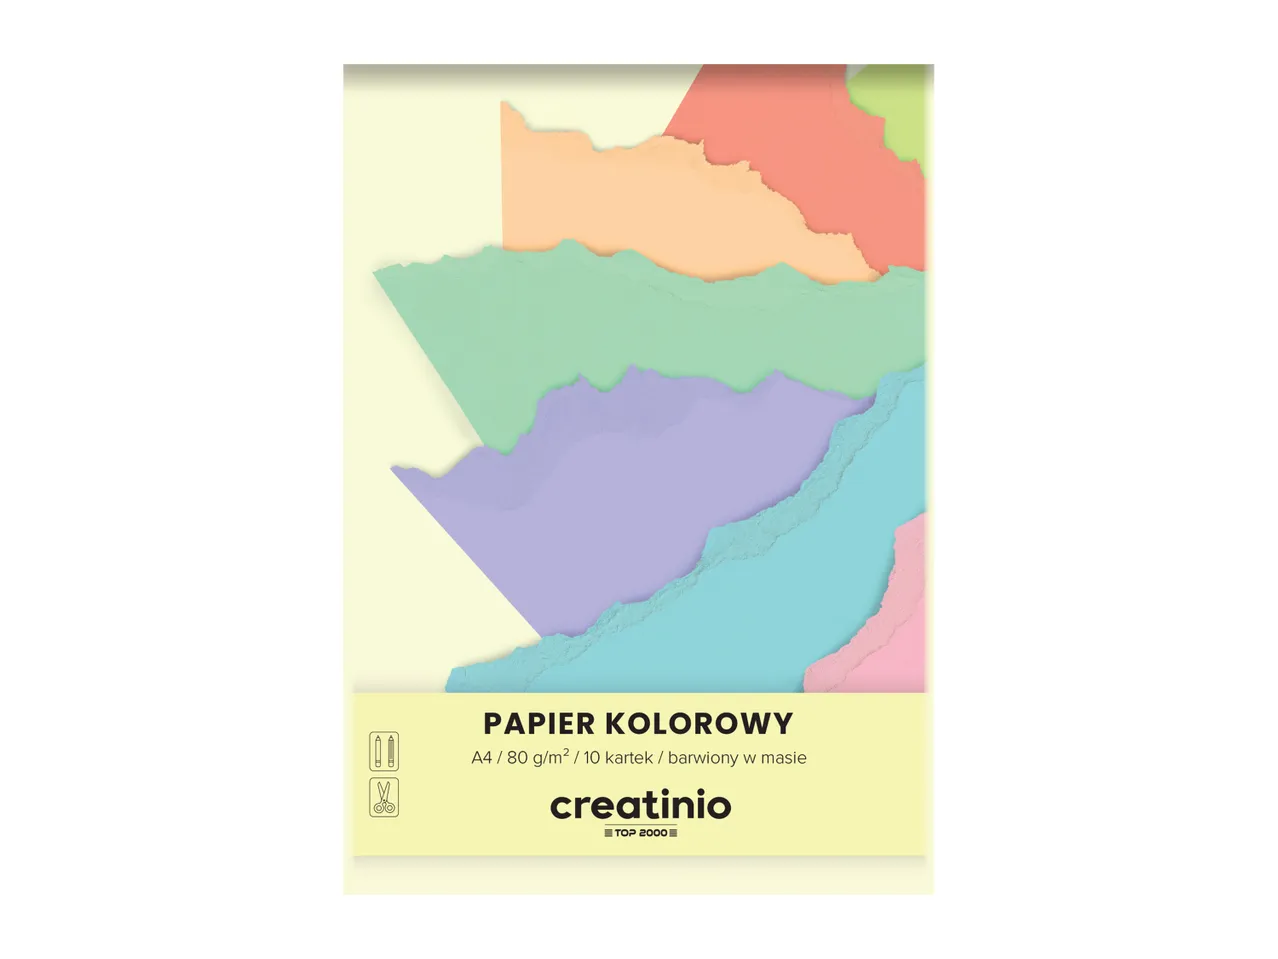 TOP 2000 Papier kolorowy A4, 10 kartek , cena 3,99 PLN 
TOP 2000 Papier kolorowy ...